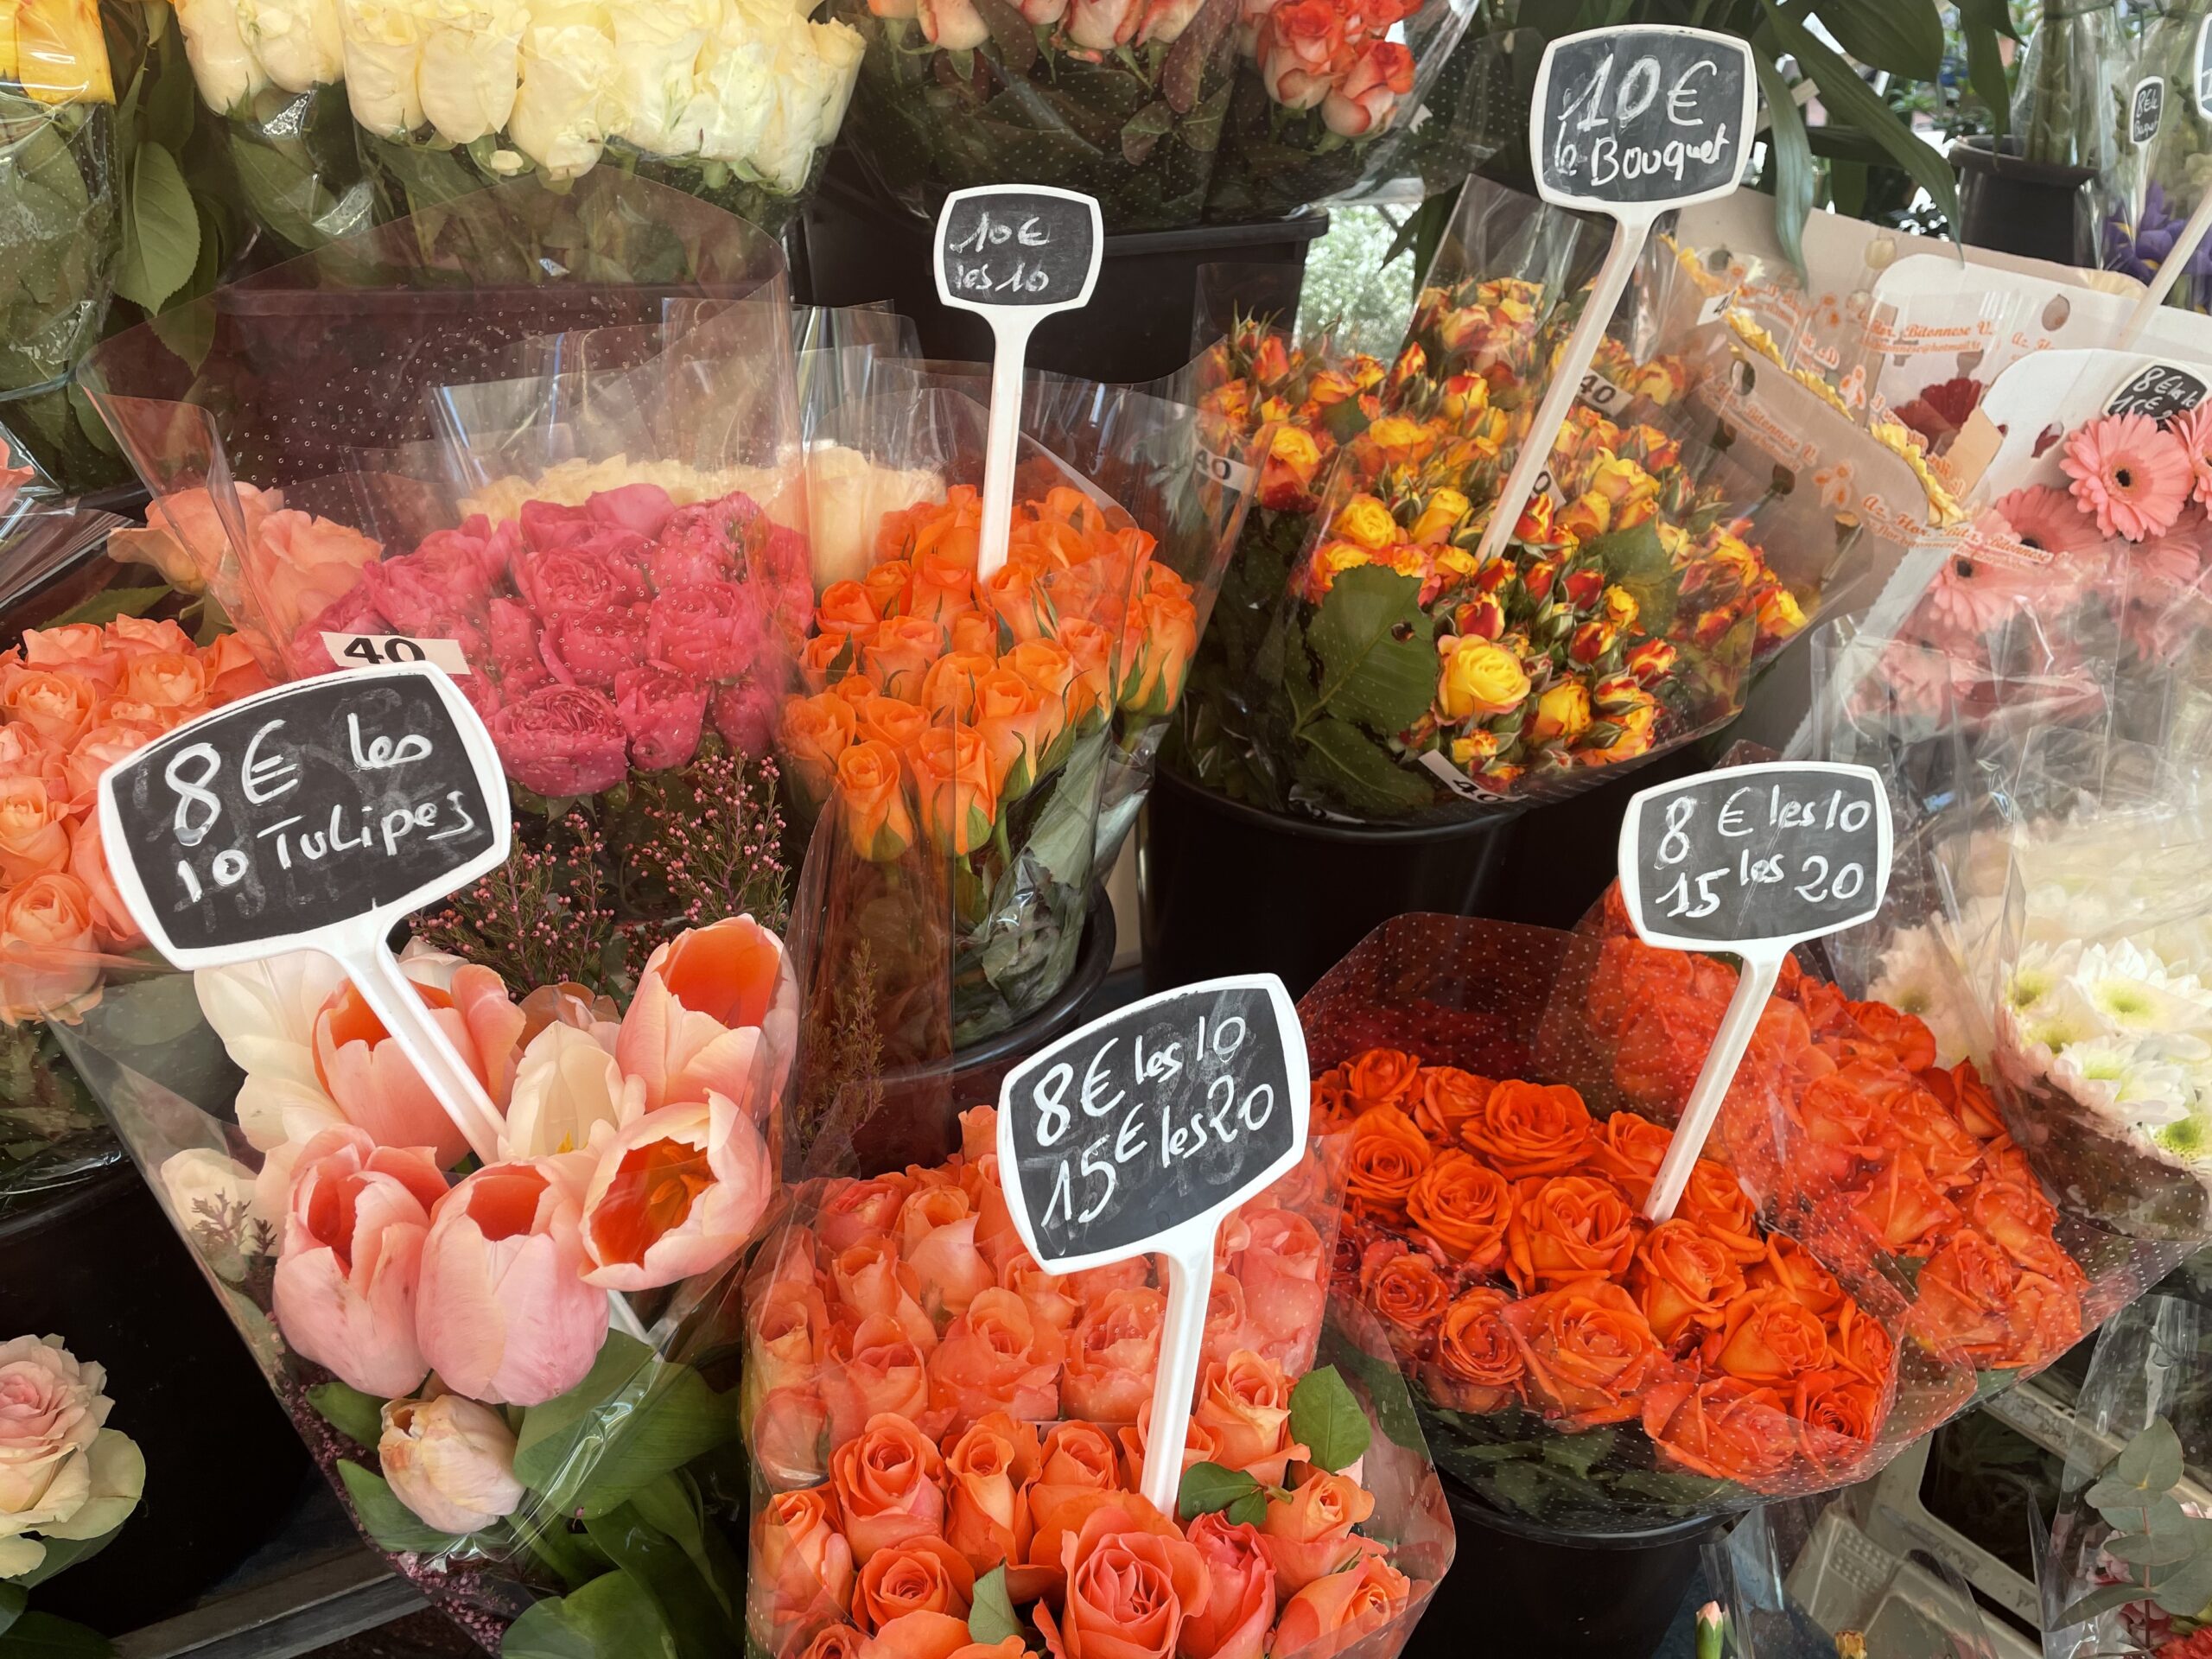 Marché Aux Fleurs Cours Saleya (Photo Credit: Kwin Mosby)